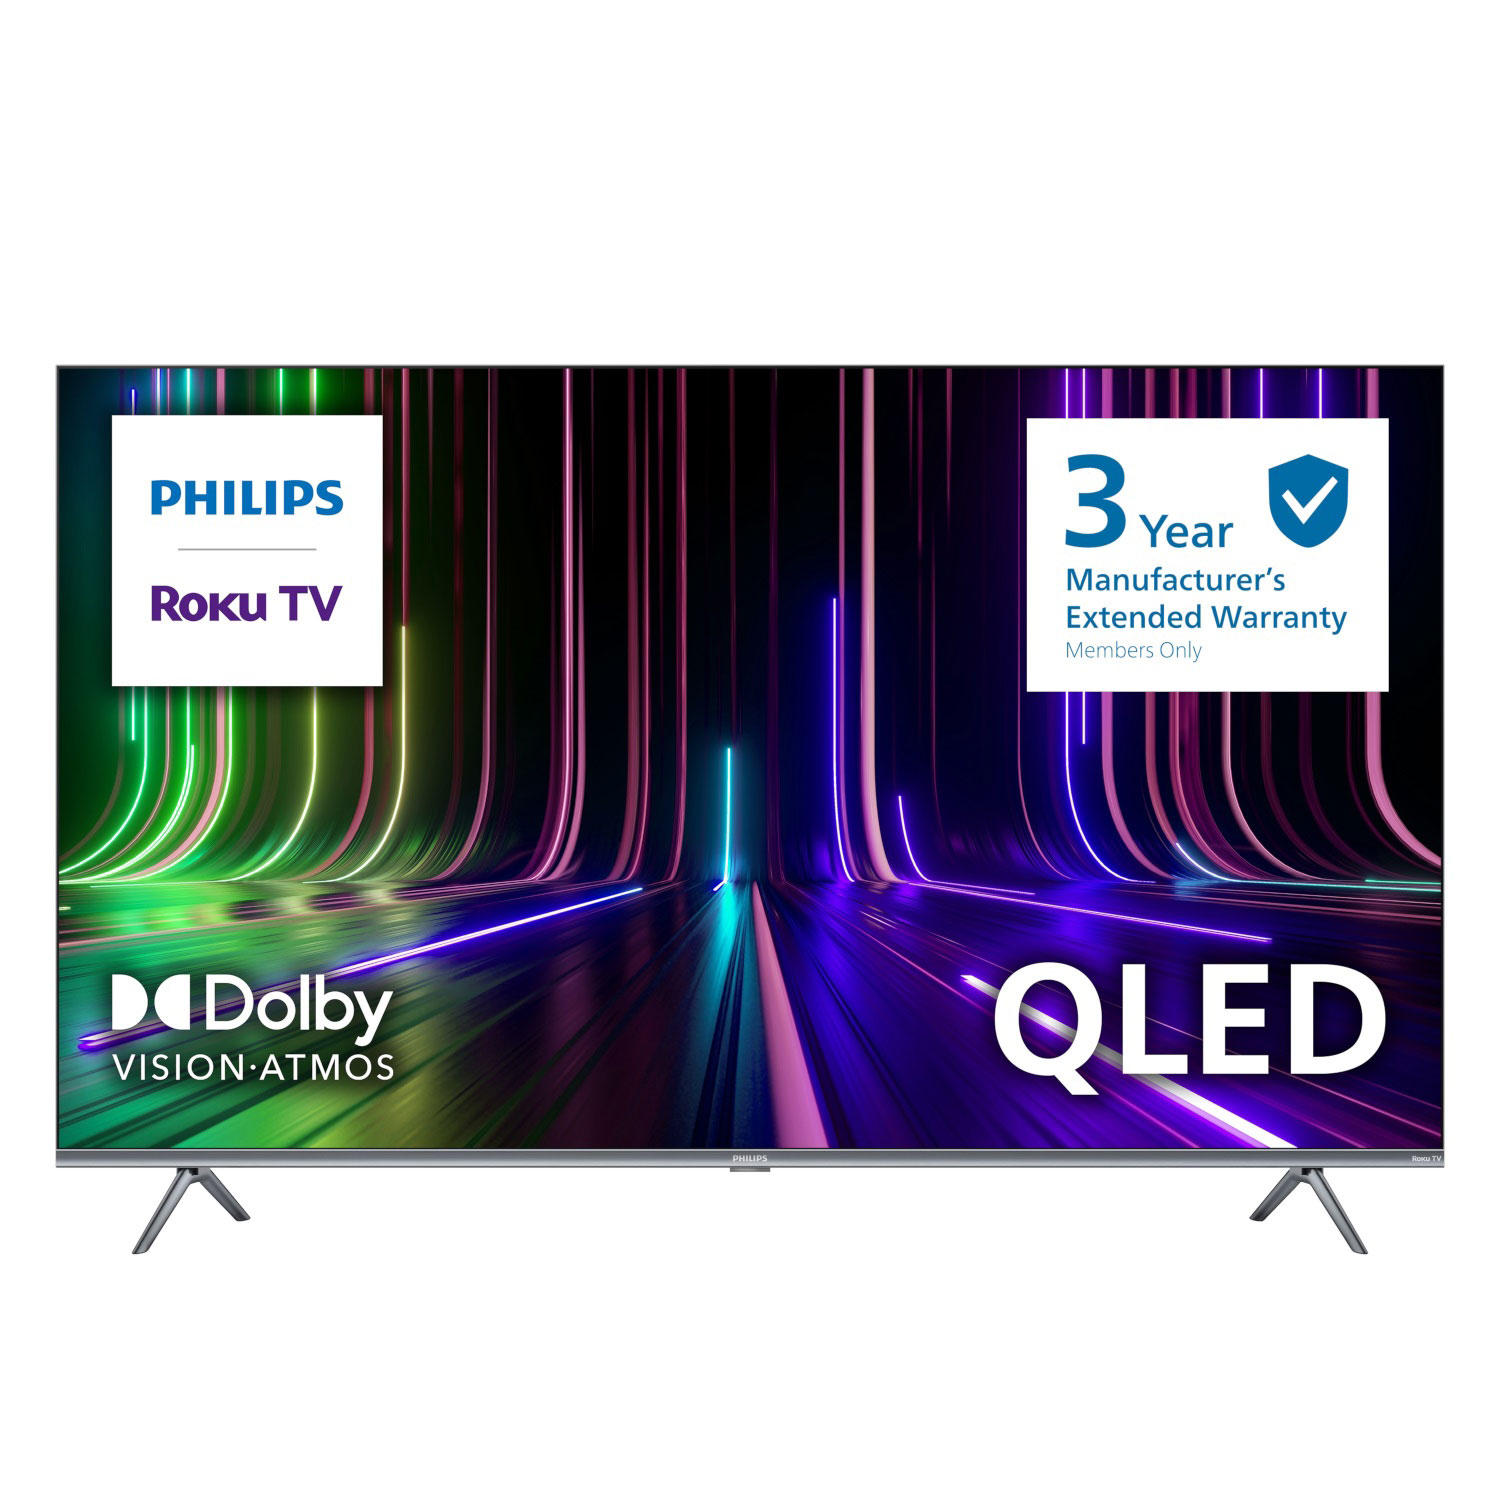 Philips 65in Class 4k QLED UltraHD Roku Smart TV - 65PUL7973/F7 $399.00